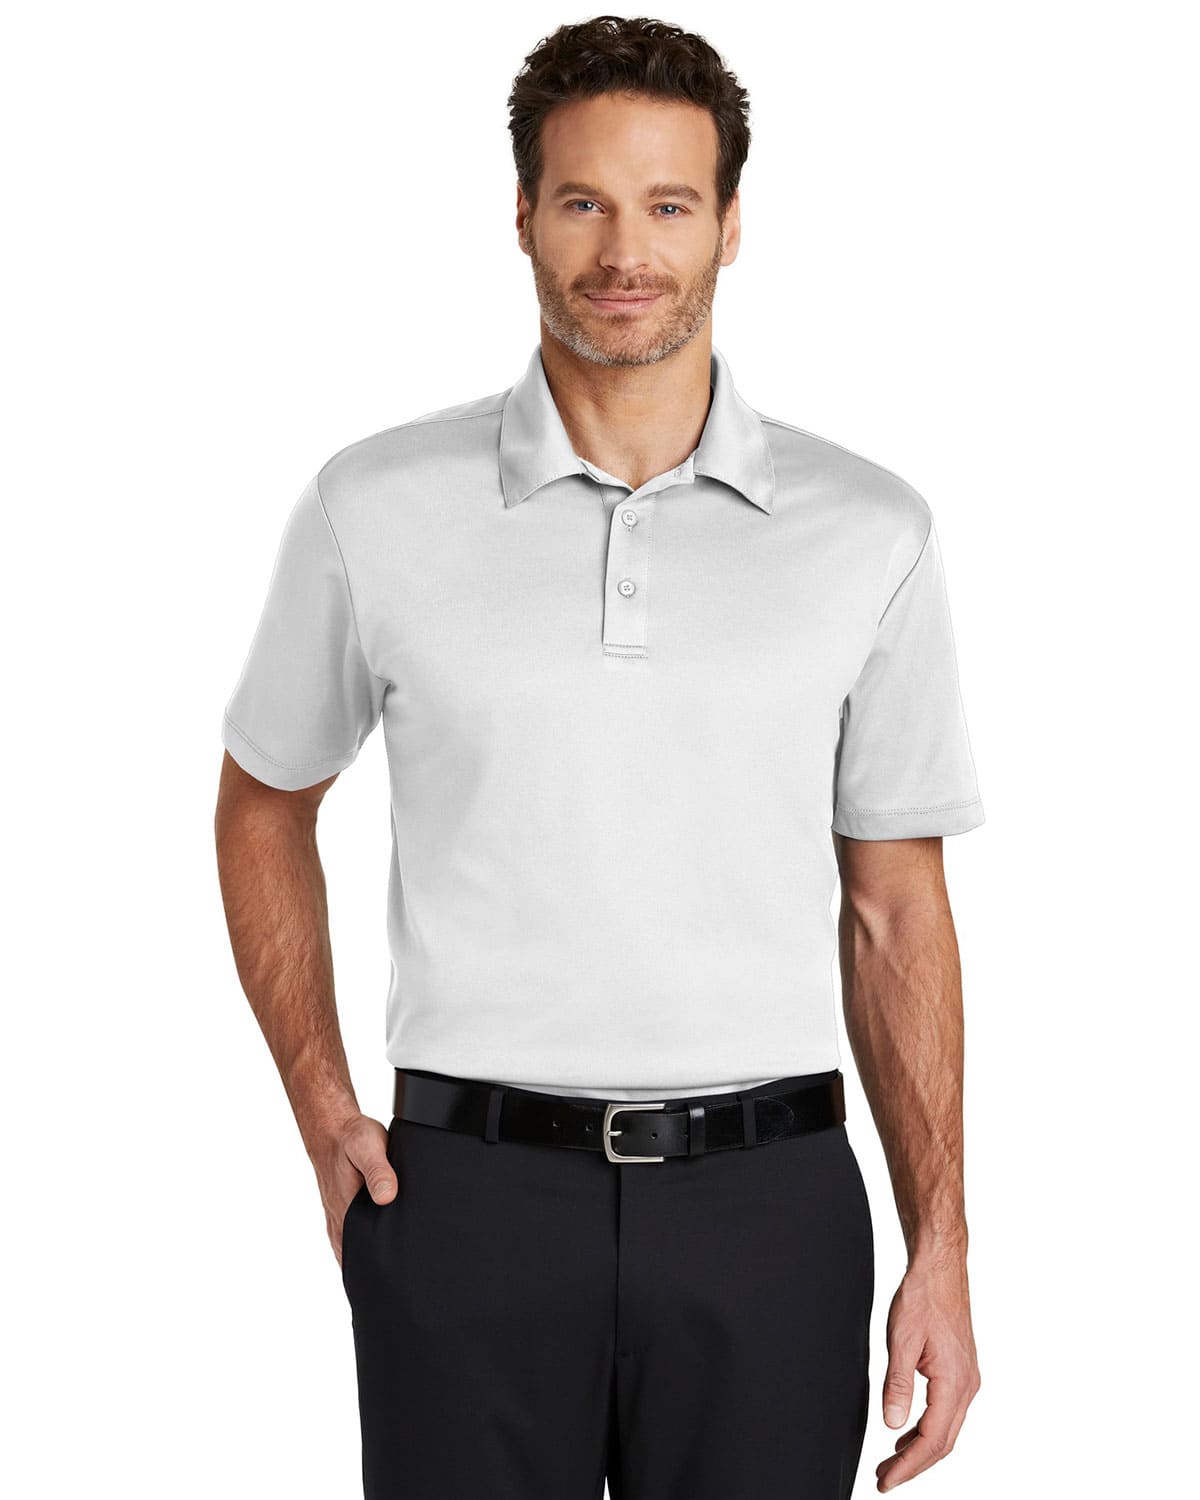 Custom Golf Polo Shirt Tie Dye Teal-White 3D Performance Men's Size:L